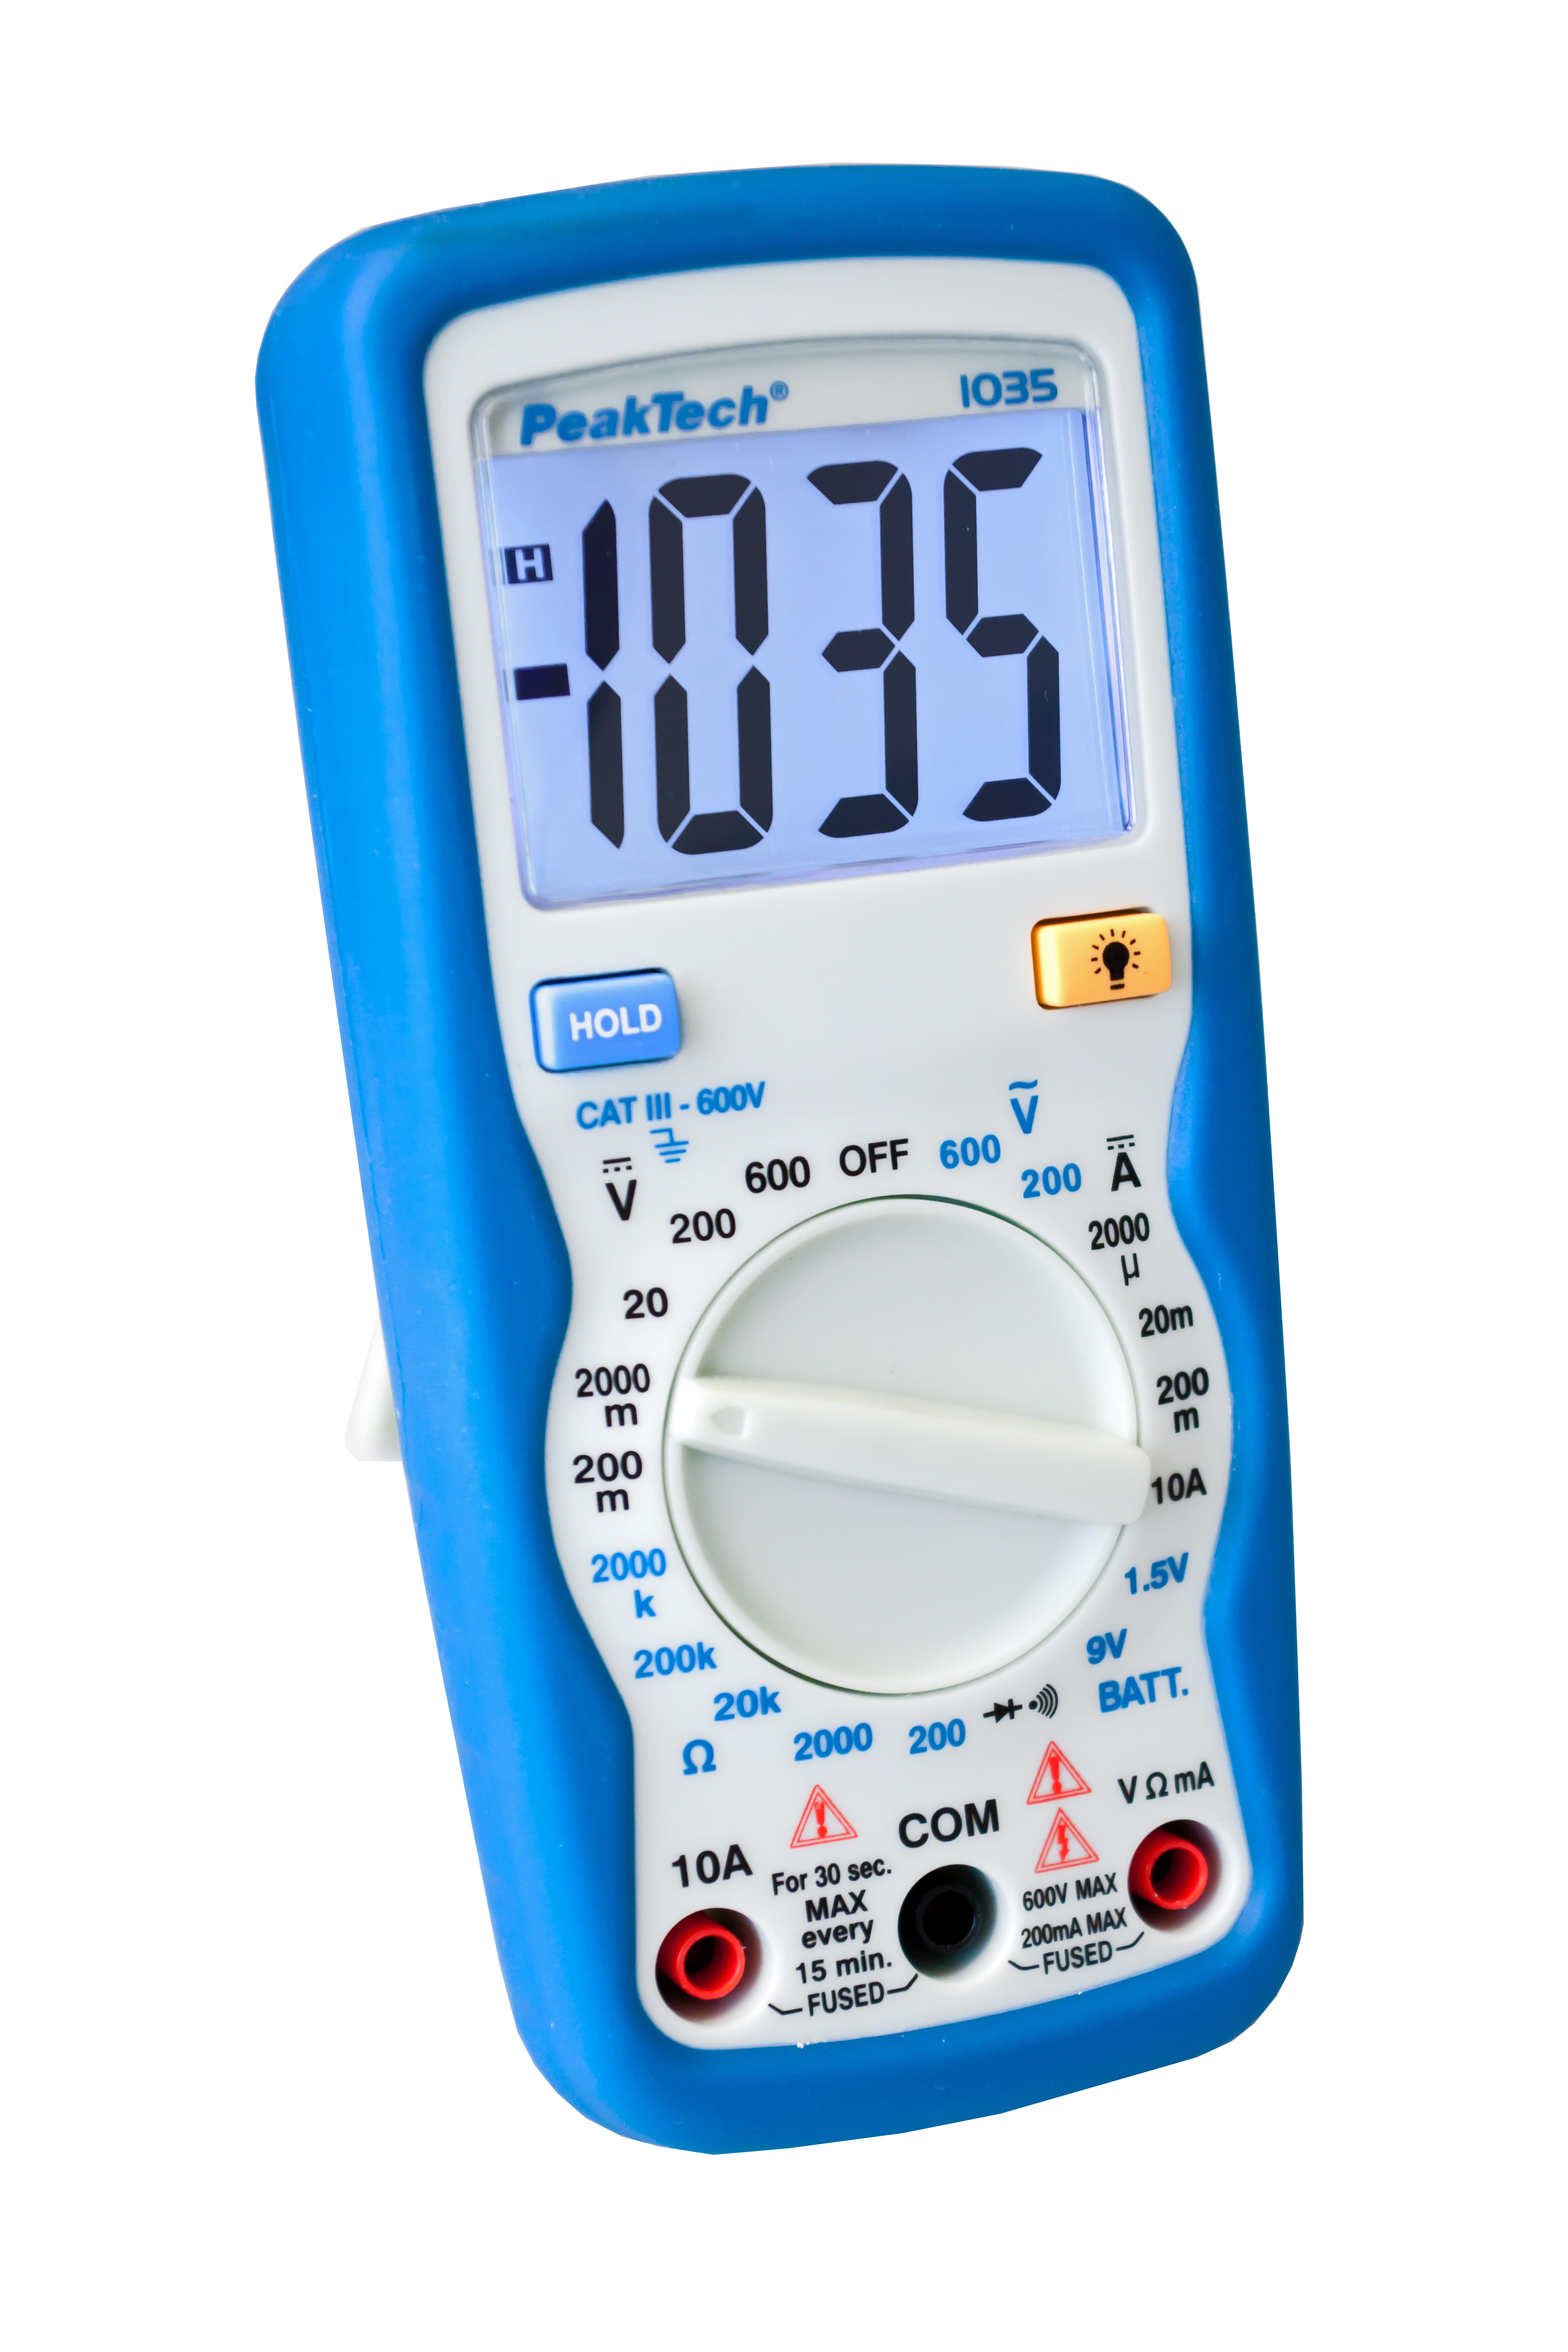 «PeakTech® P 1035» 600V AC / DC digital multimeter ~ 2000 digit LCD